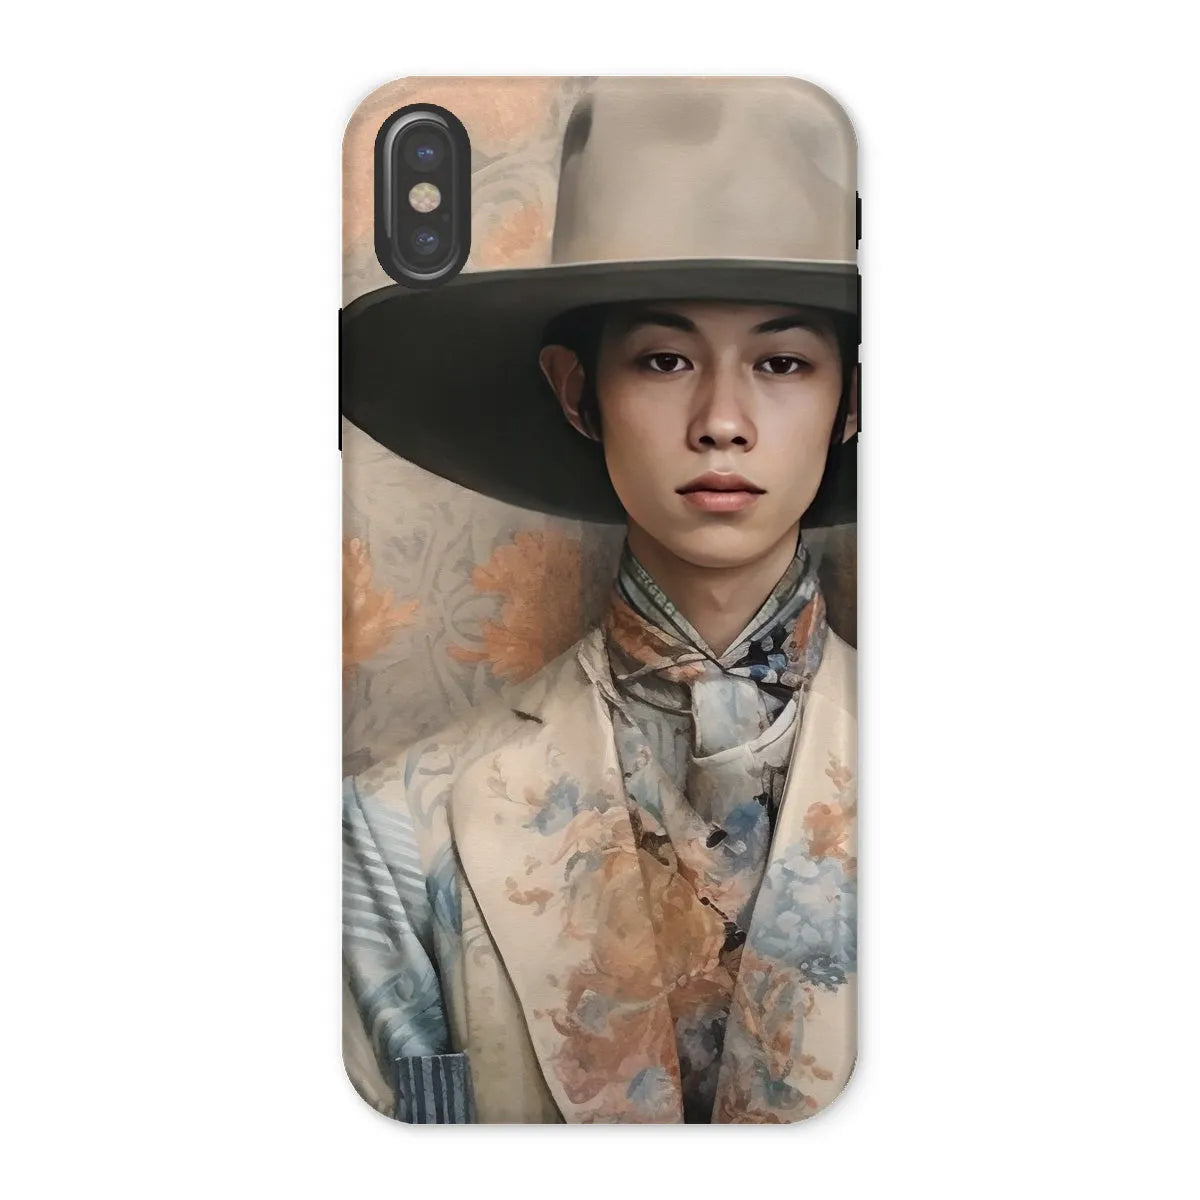 Thuanthong The Transgender Cowboy - Thai F2m Art Phone Case - Iphone x / Matte - Mobile Phone Cases - Aesthetic Art